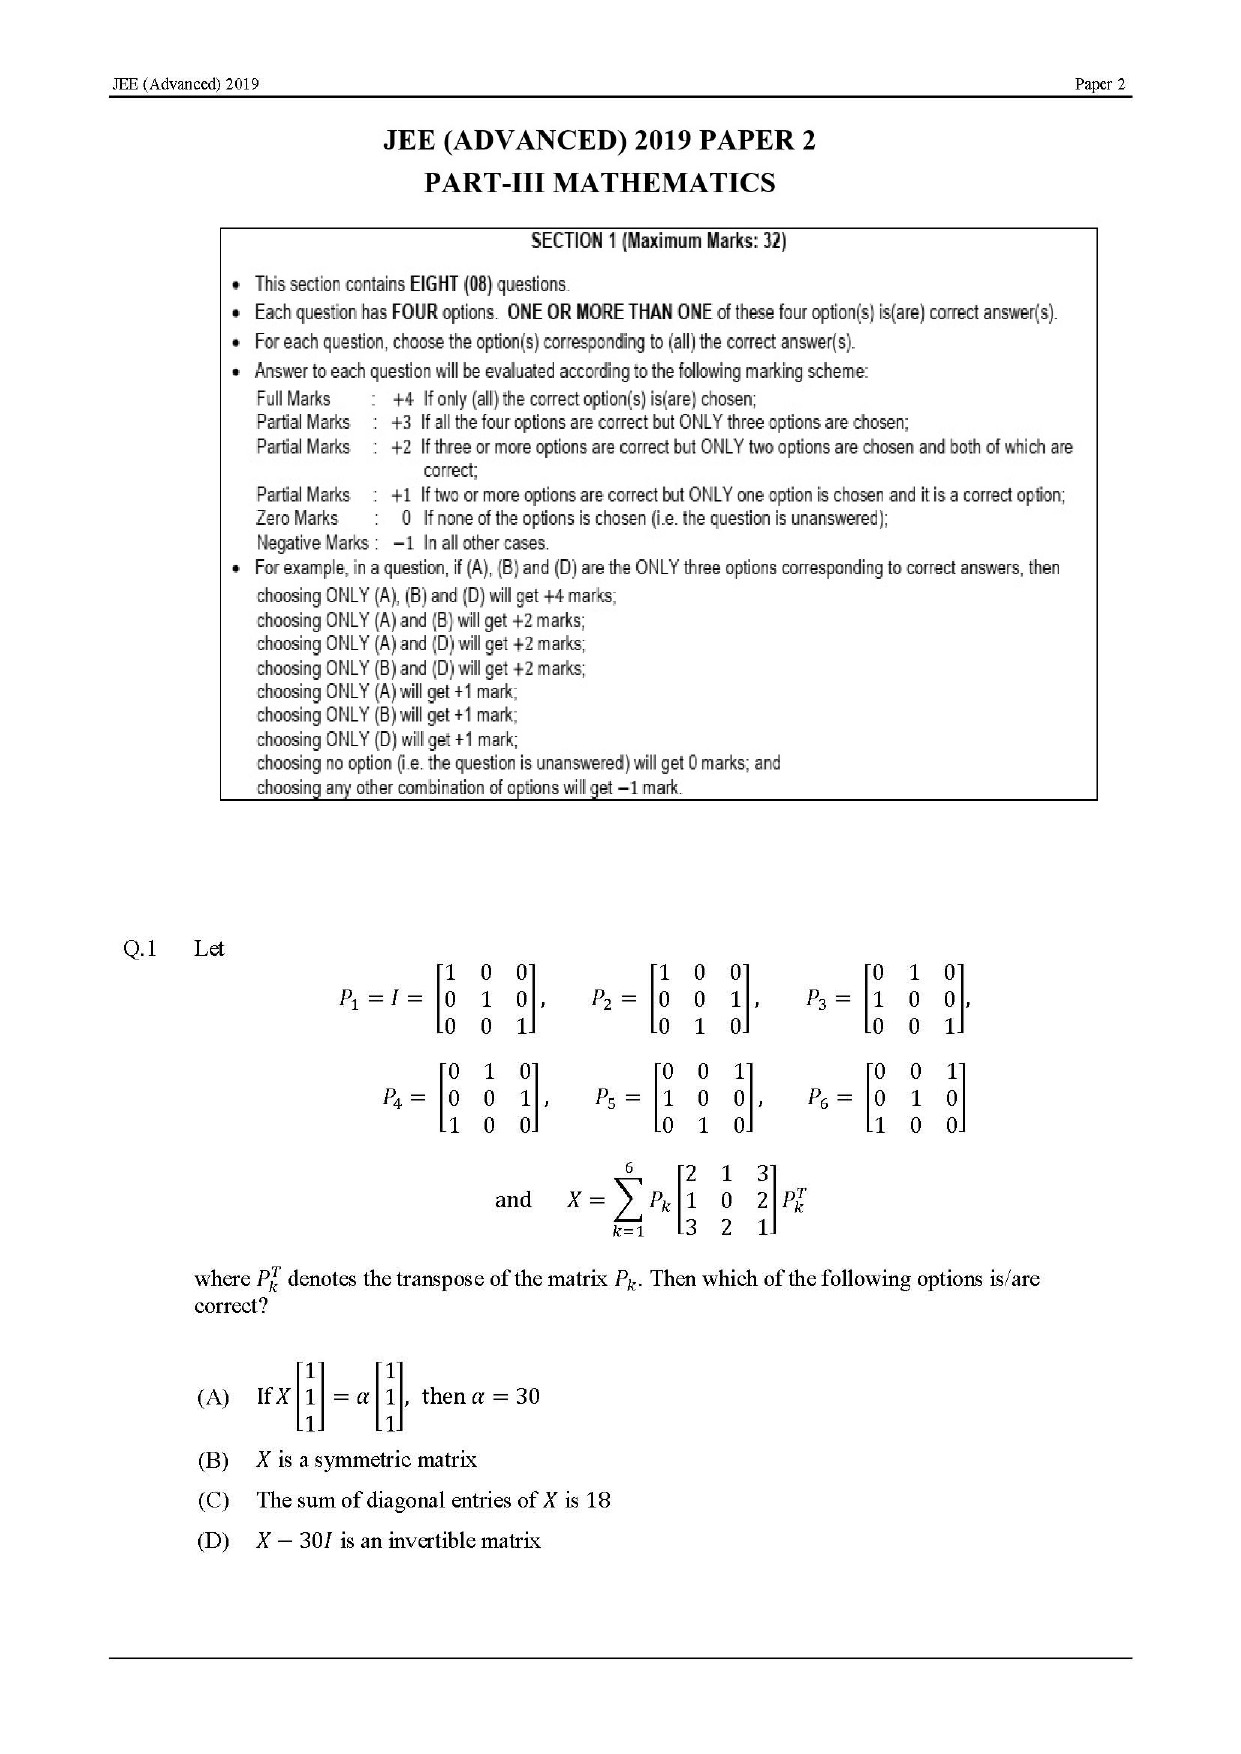 JEE Advanced English Question Paper 2019 Paper 2 Mathematics 1